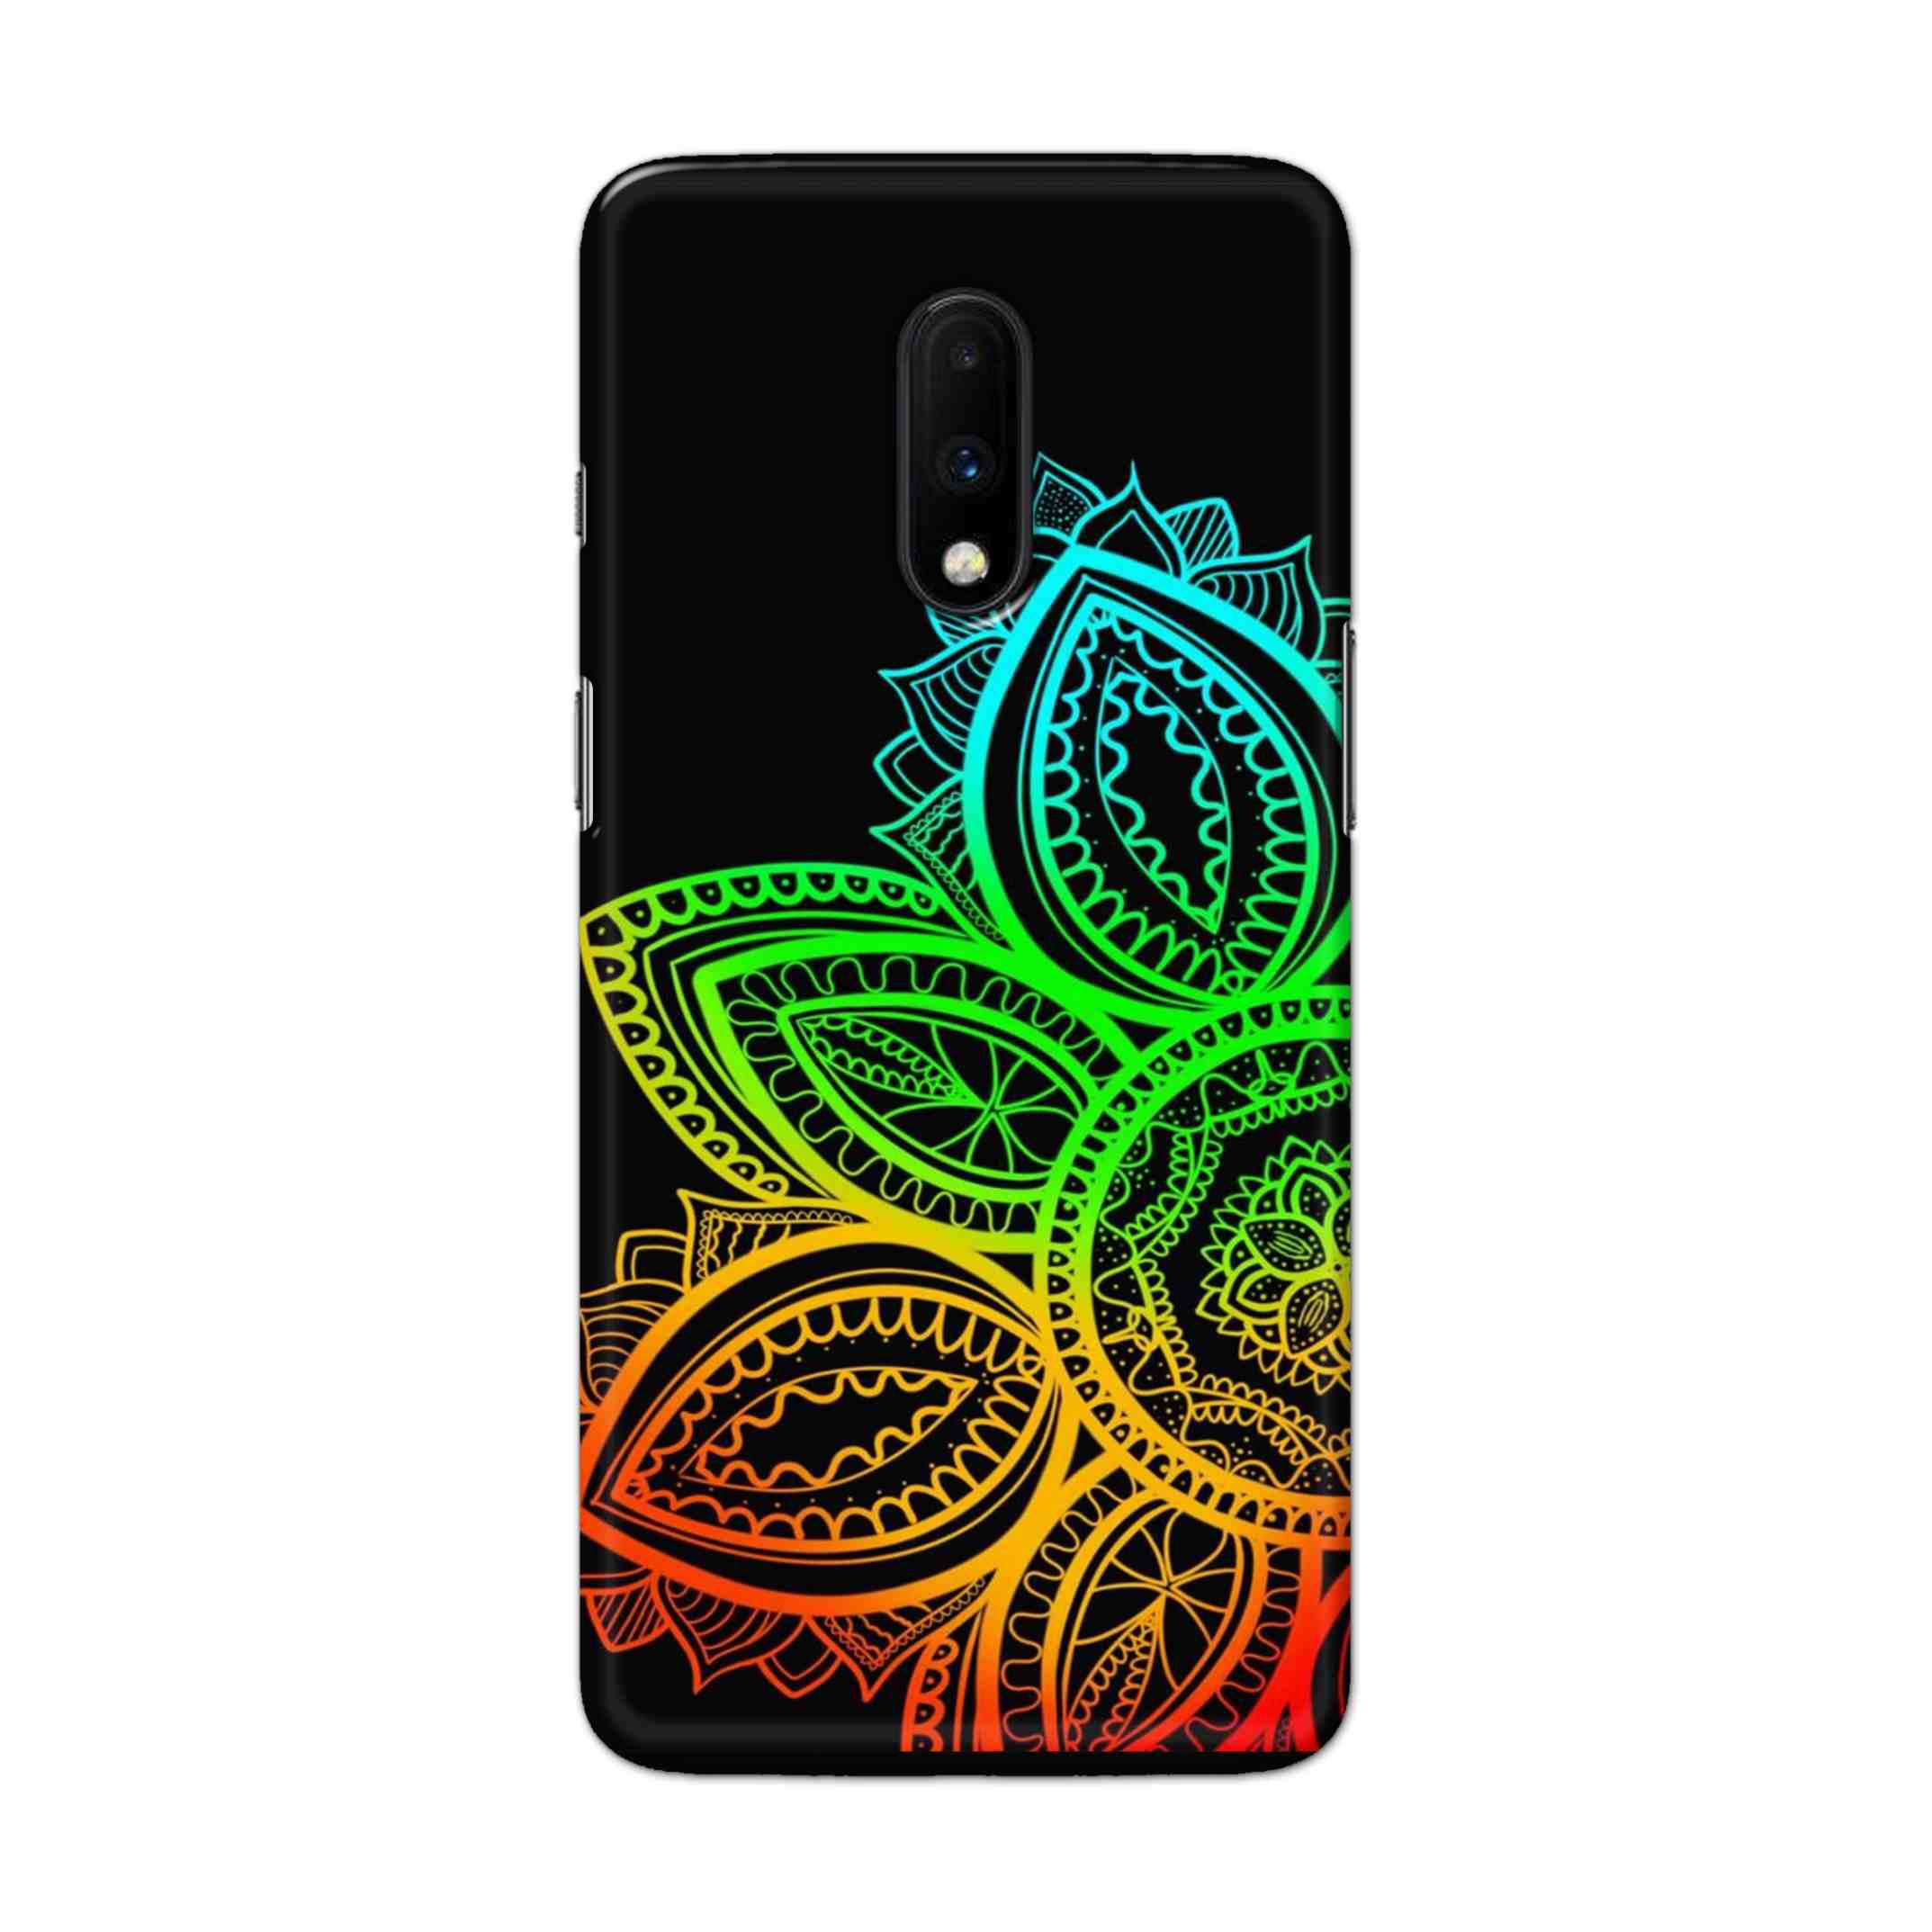 Buy Neon Mandala Hard Back Mobile Phone Case Cover For OnePlus 7 Online